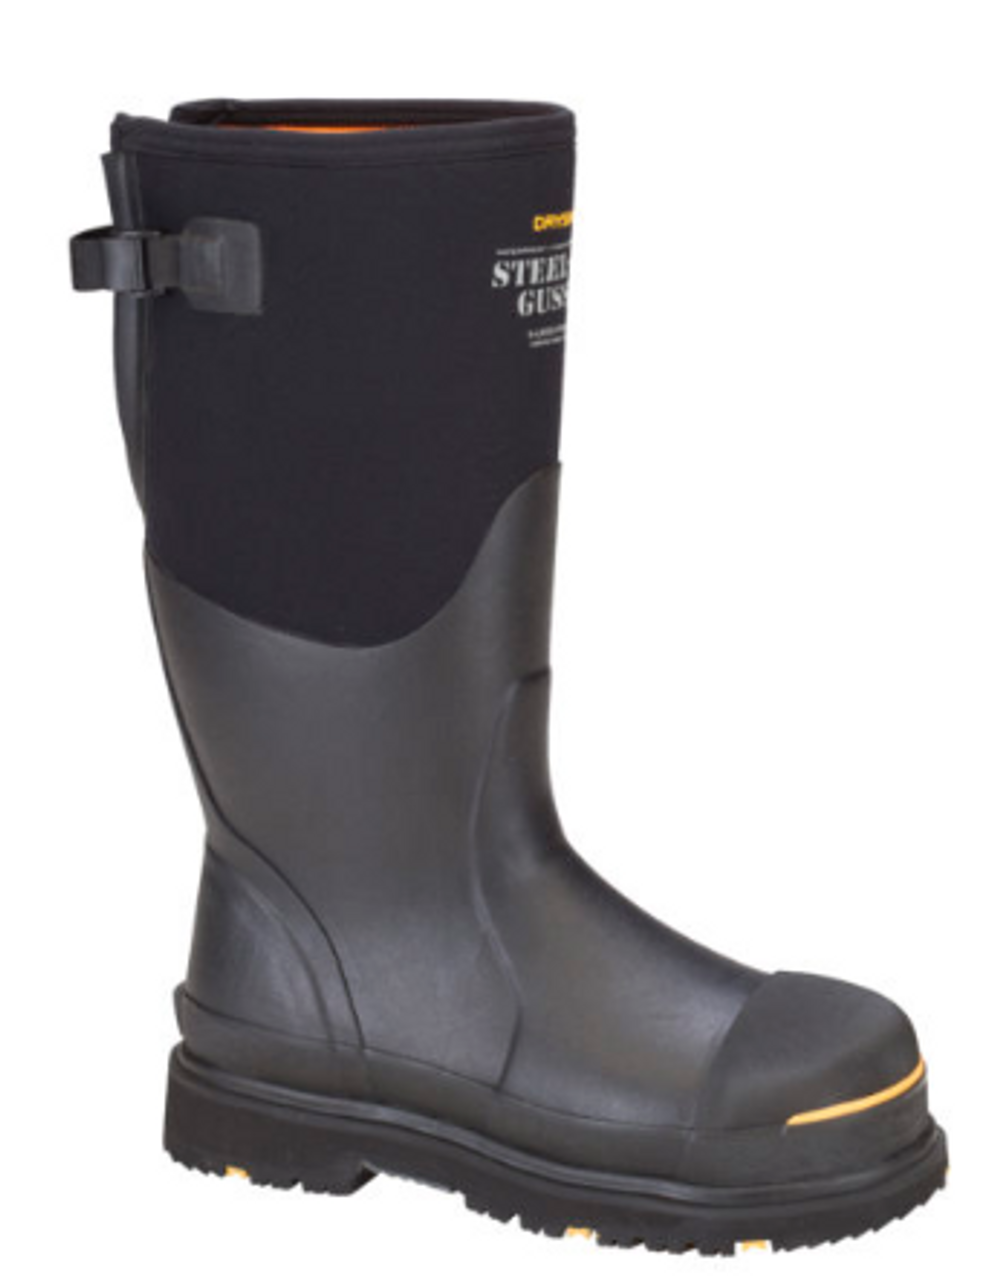 Steel-Toe Adjustable Gusset Work Boots